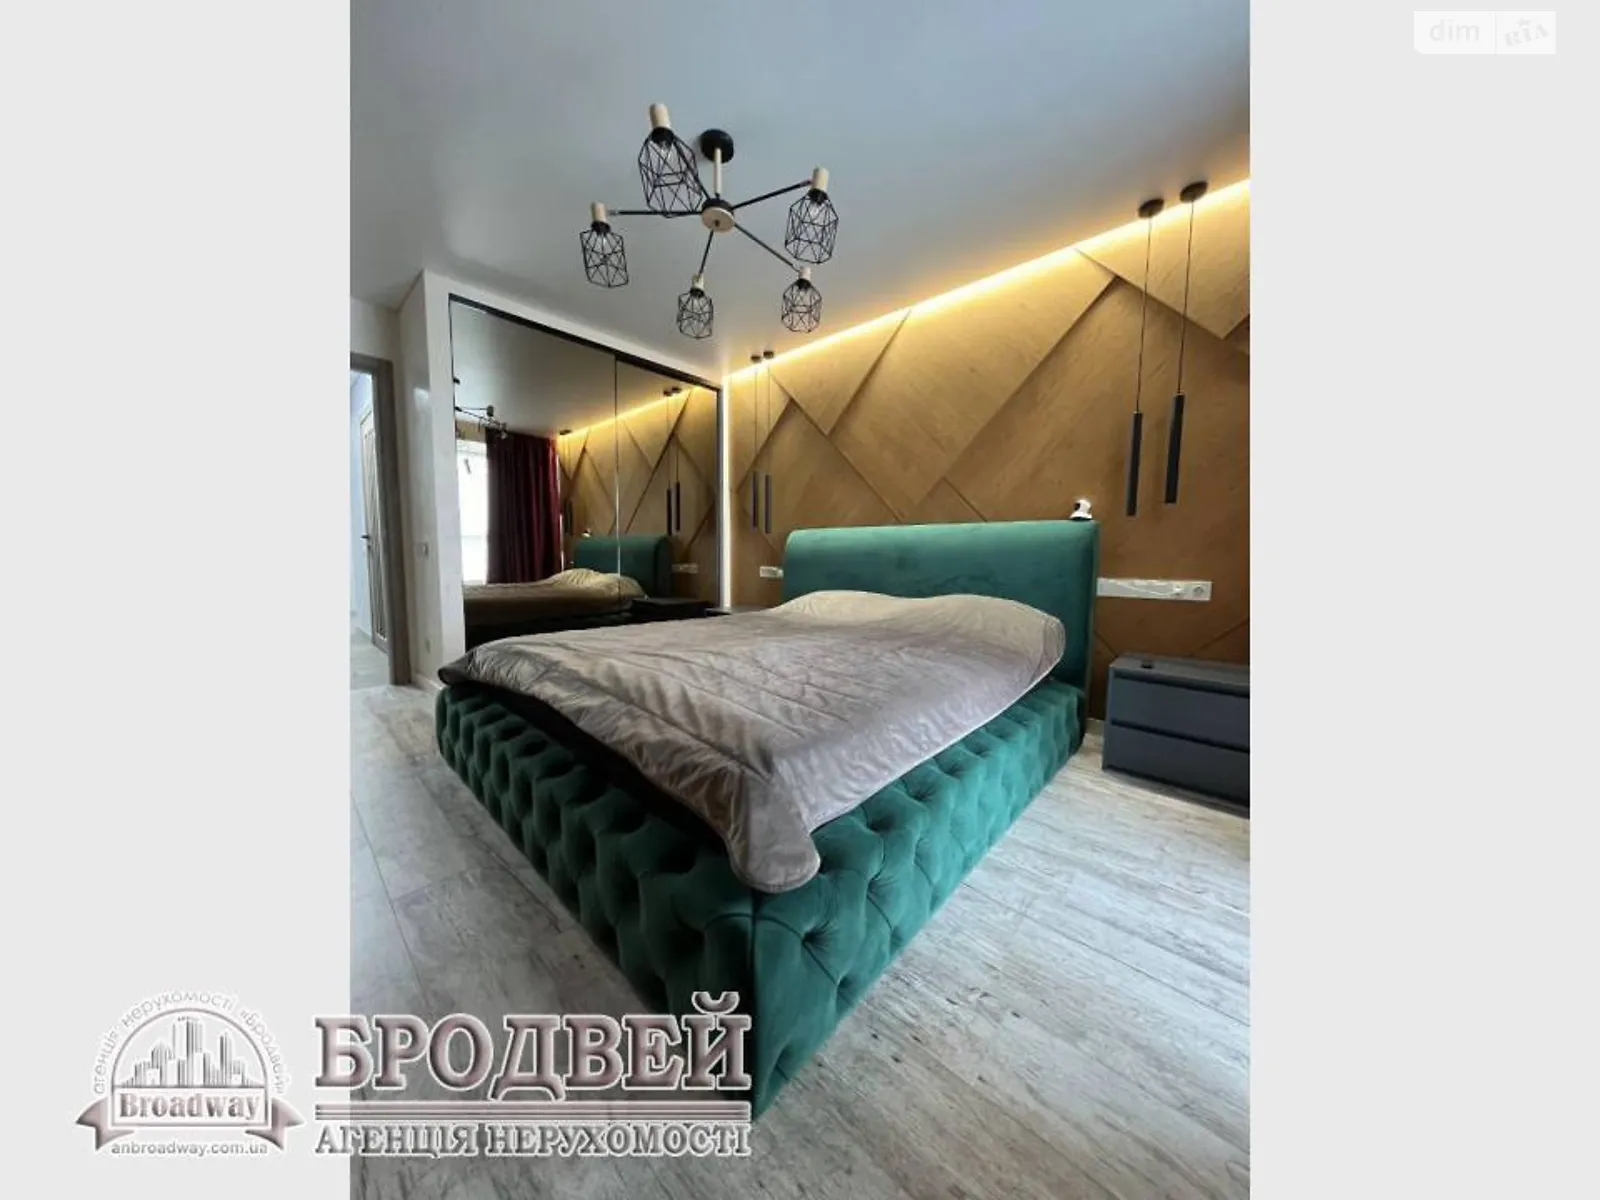 Продается 3-комнатная квартира 89 кв. м в Чернигове, цена: 120000 $